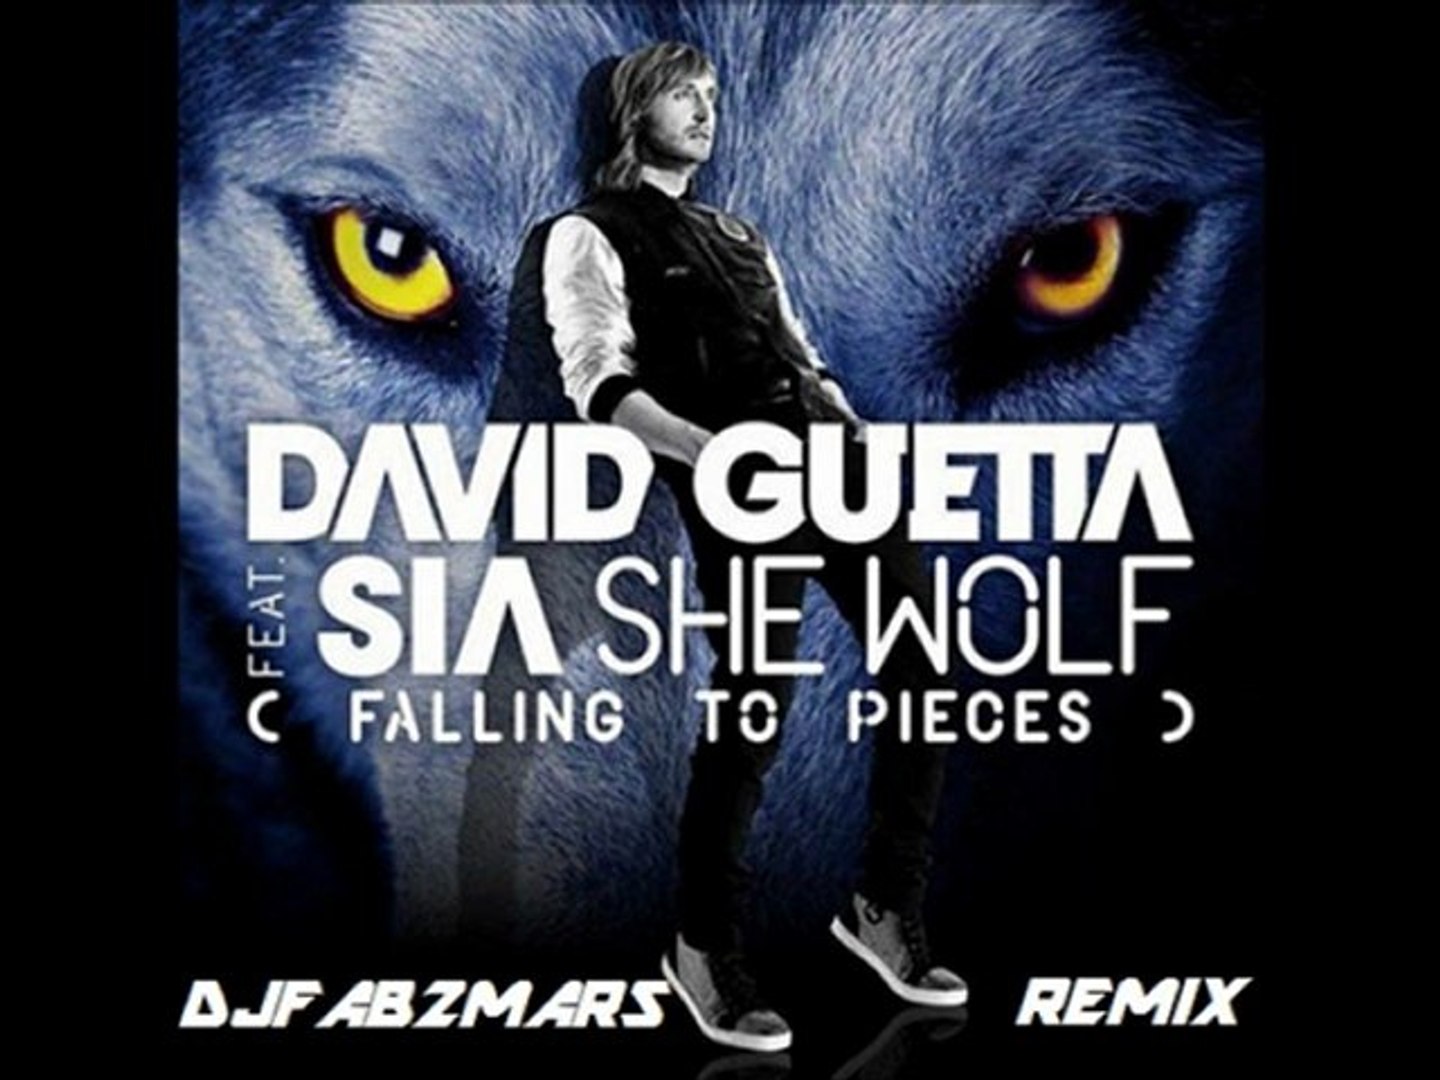 David Guetta feat Sia - She Wolf (Djfab2mars remix) - Vidéo Dailymotion